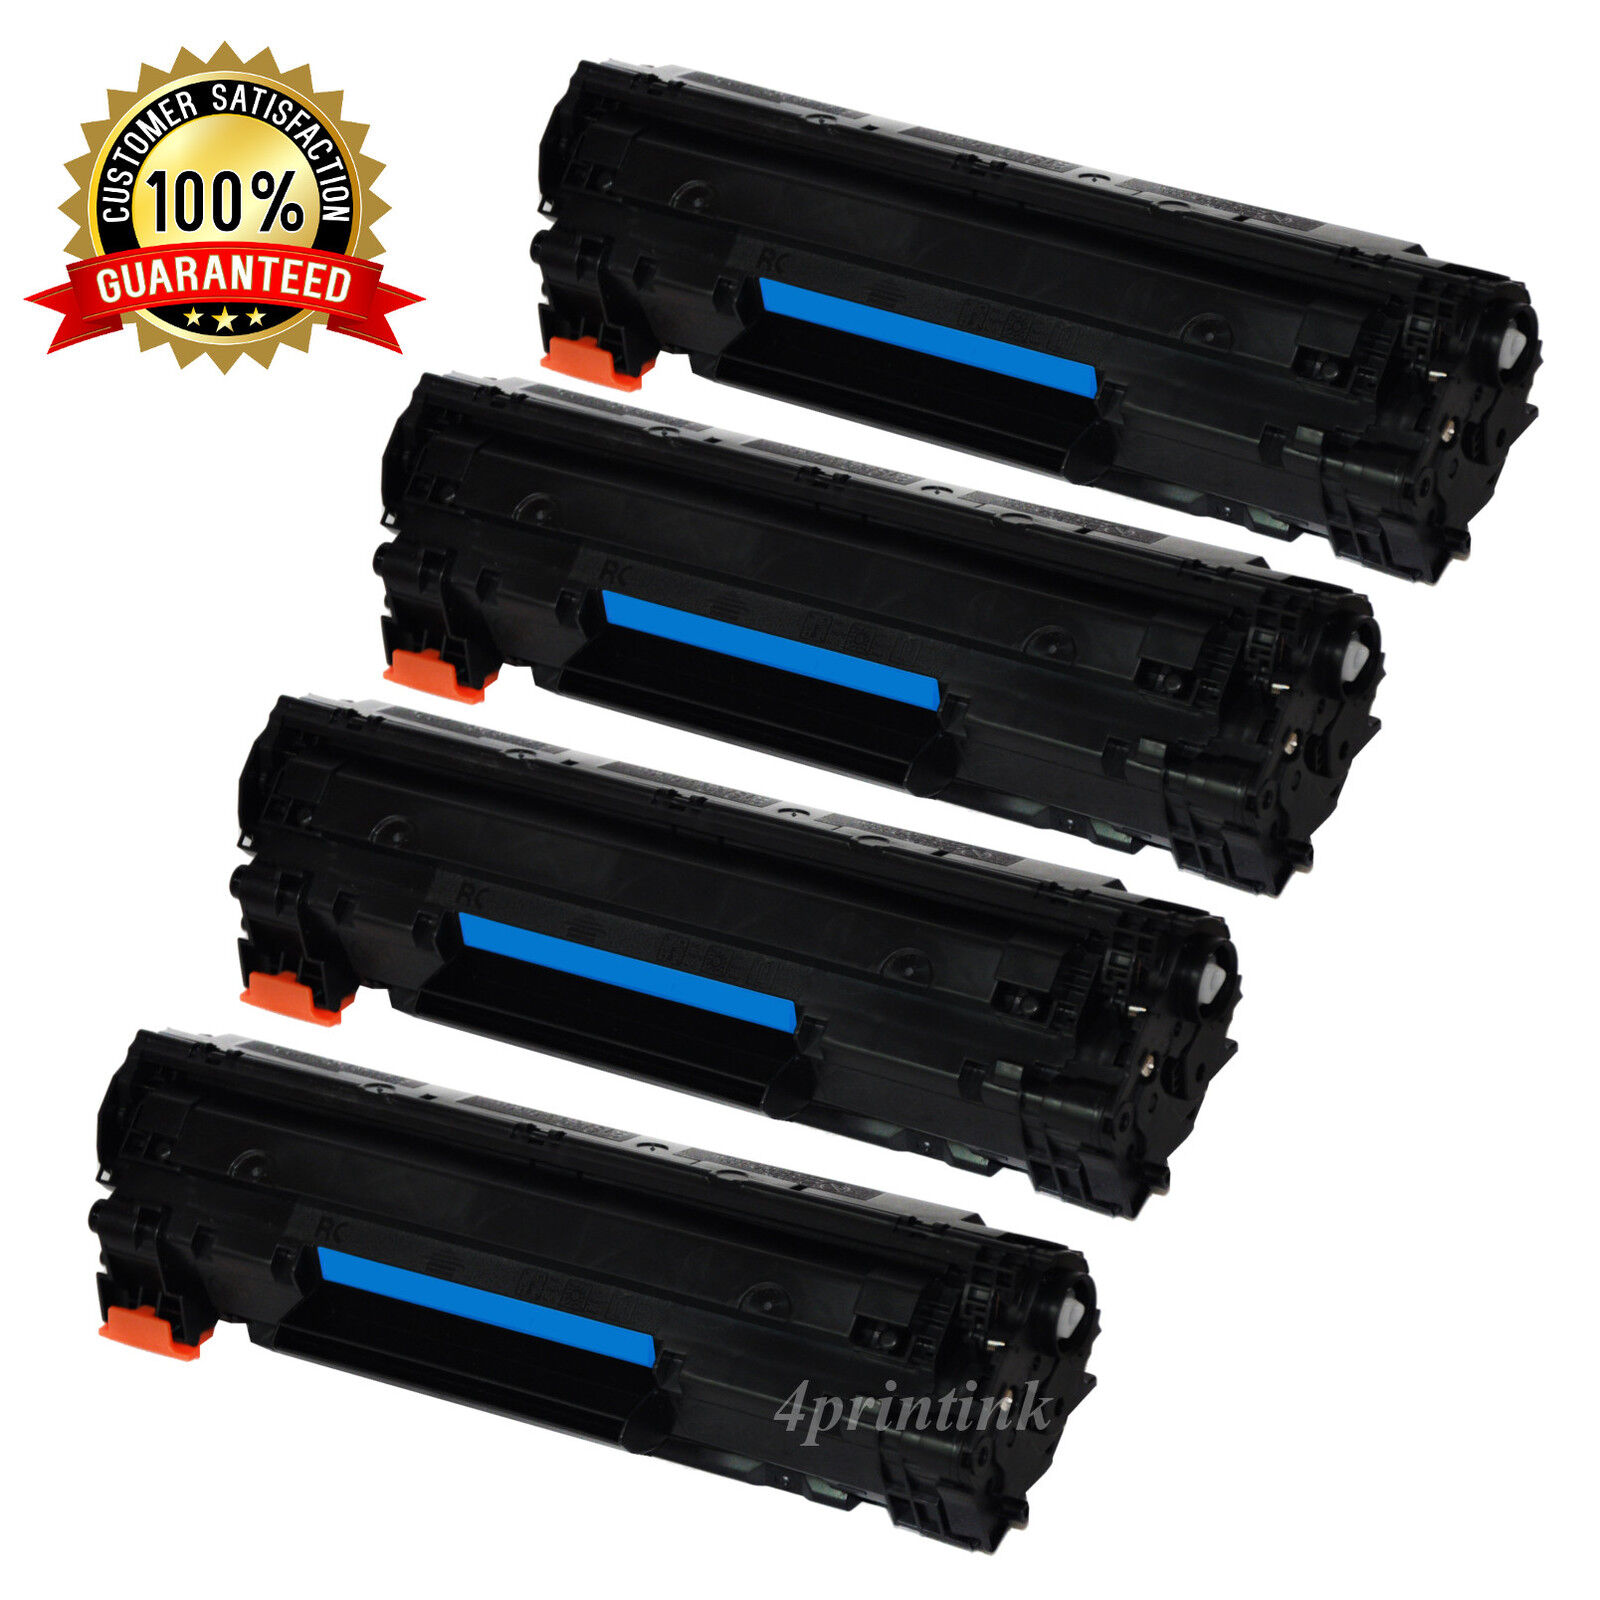 4 Black 83A CF283A Toner Cartridges For HP LaserJet Pro M127fn M127fw M125nw MFP